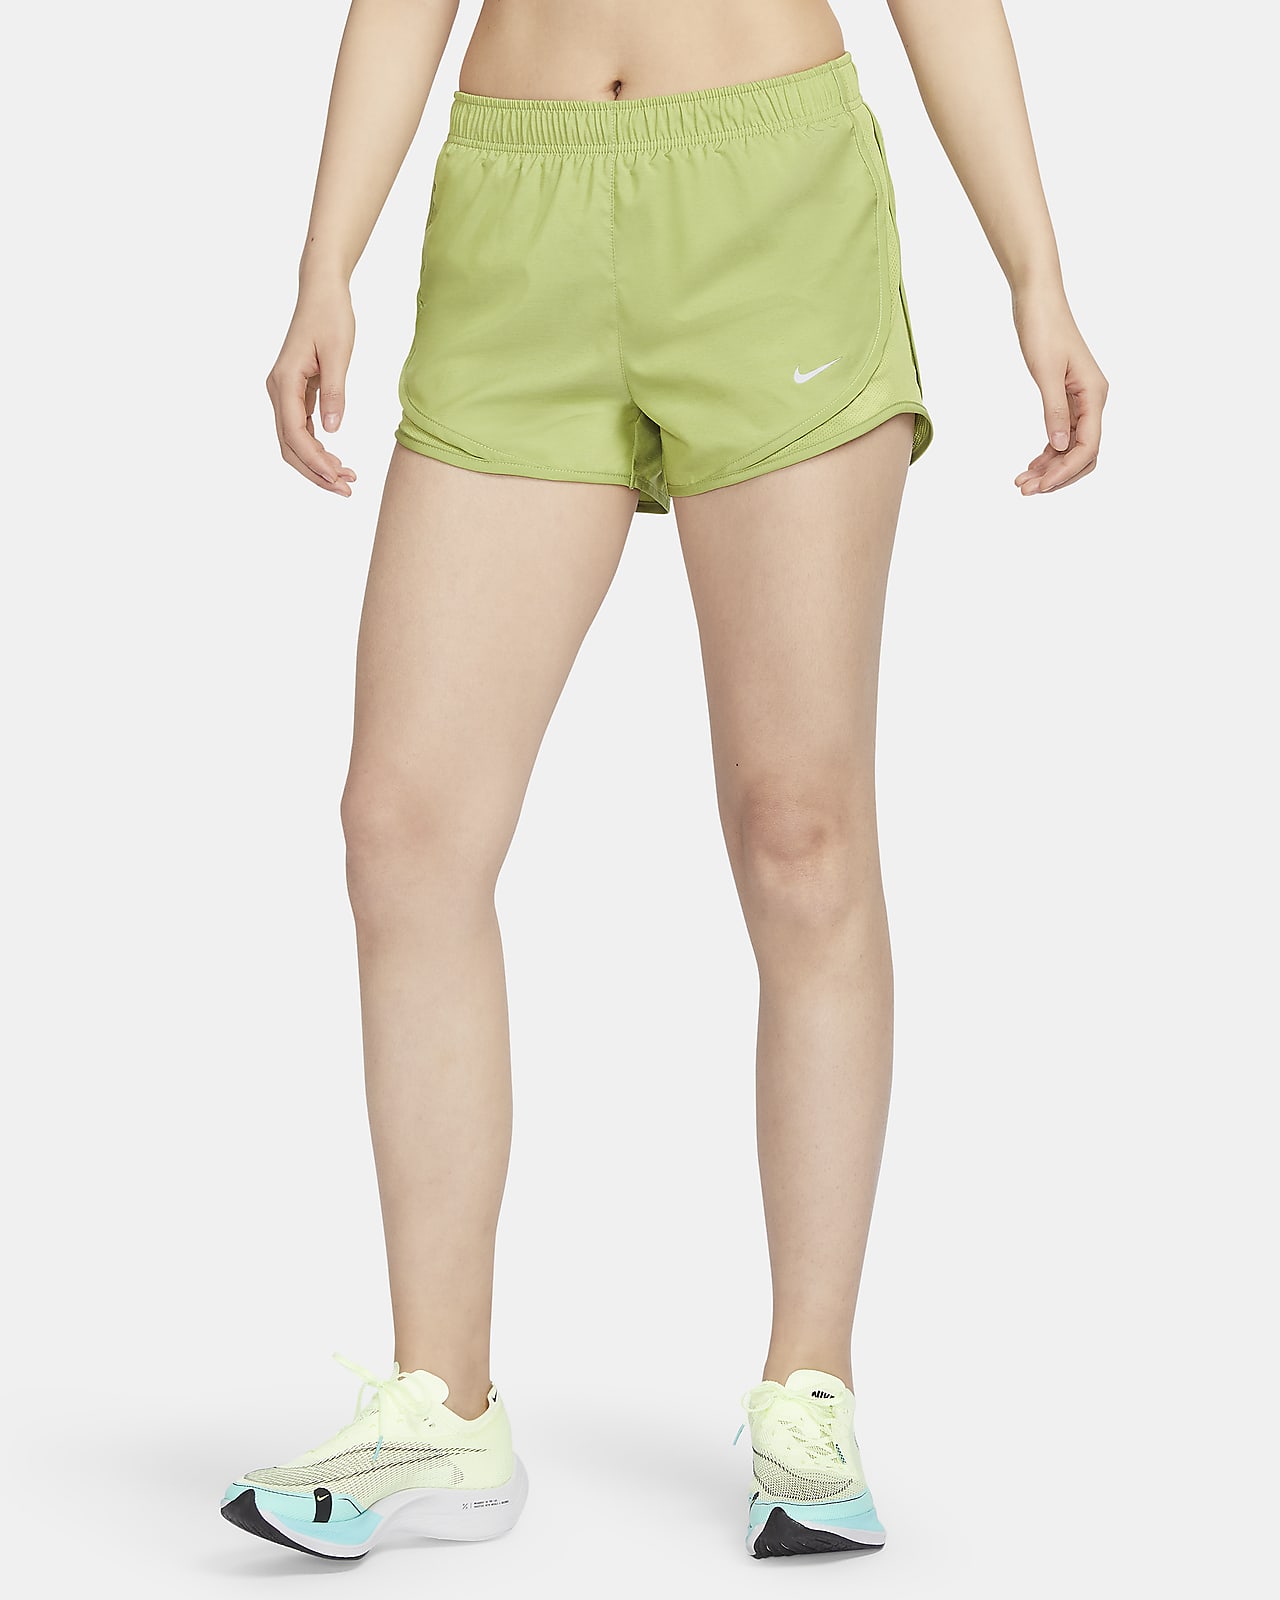 Nike Girl's Dry Tempo Running Shorts (Gunsmoke Grey, Small